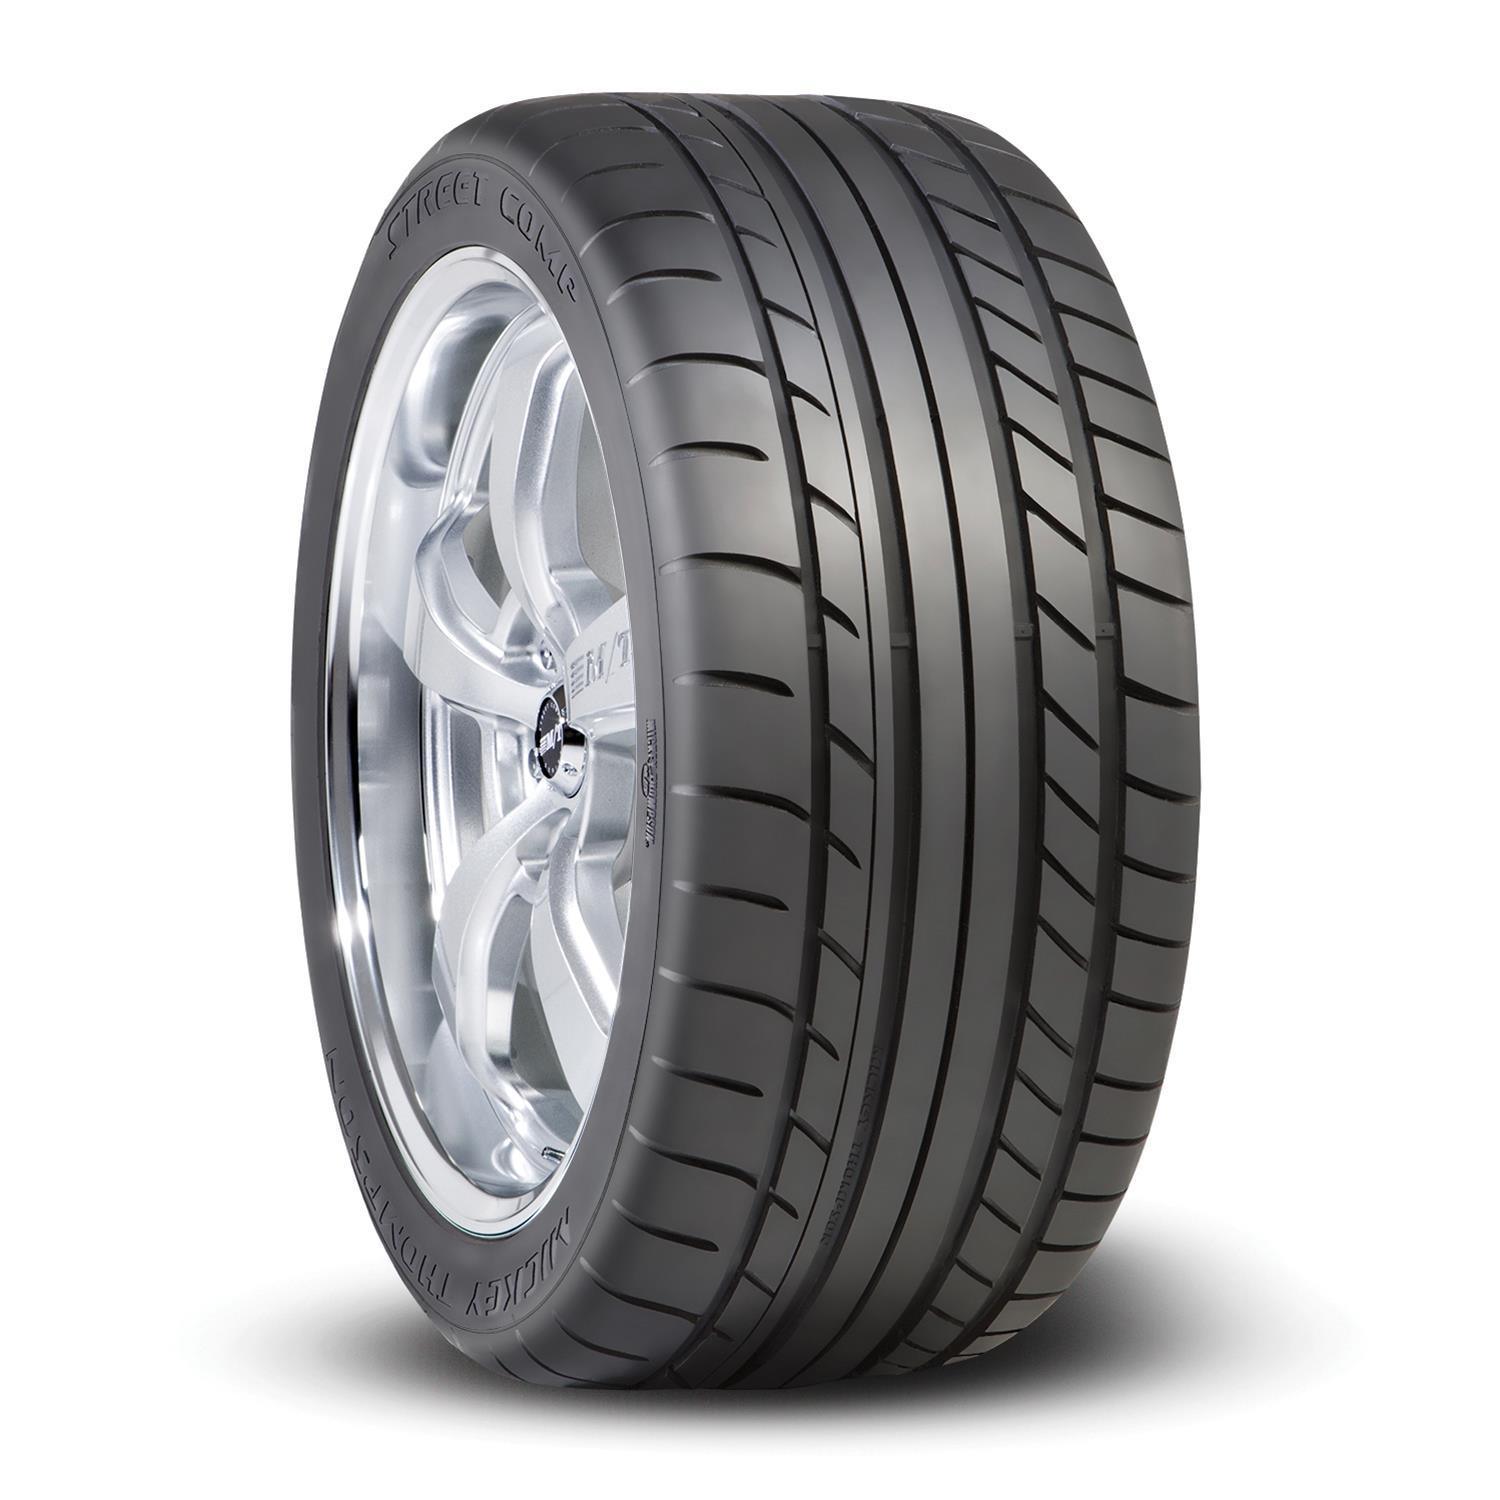 315/35R17-102W Street Comp Tire - Burlile Performance Products